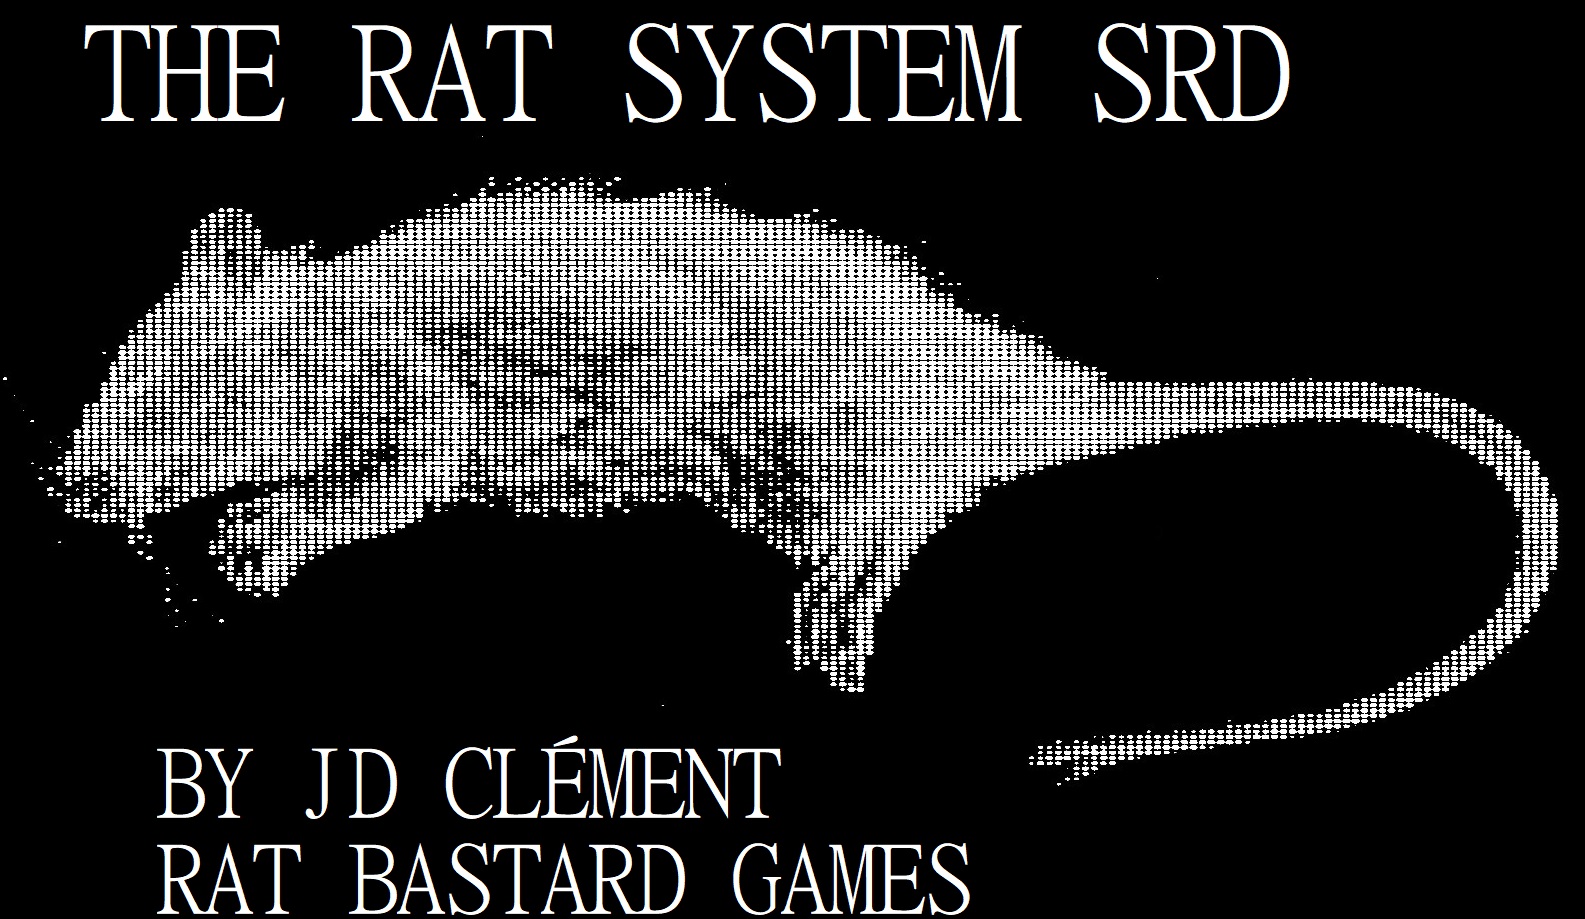 The Rat System SRD